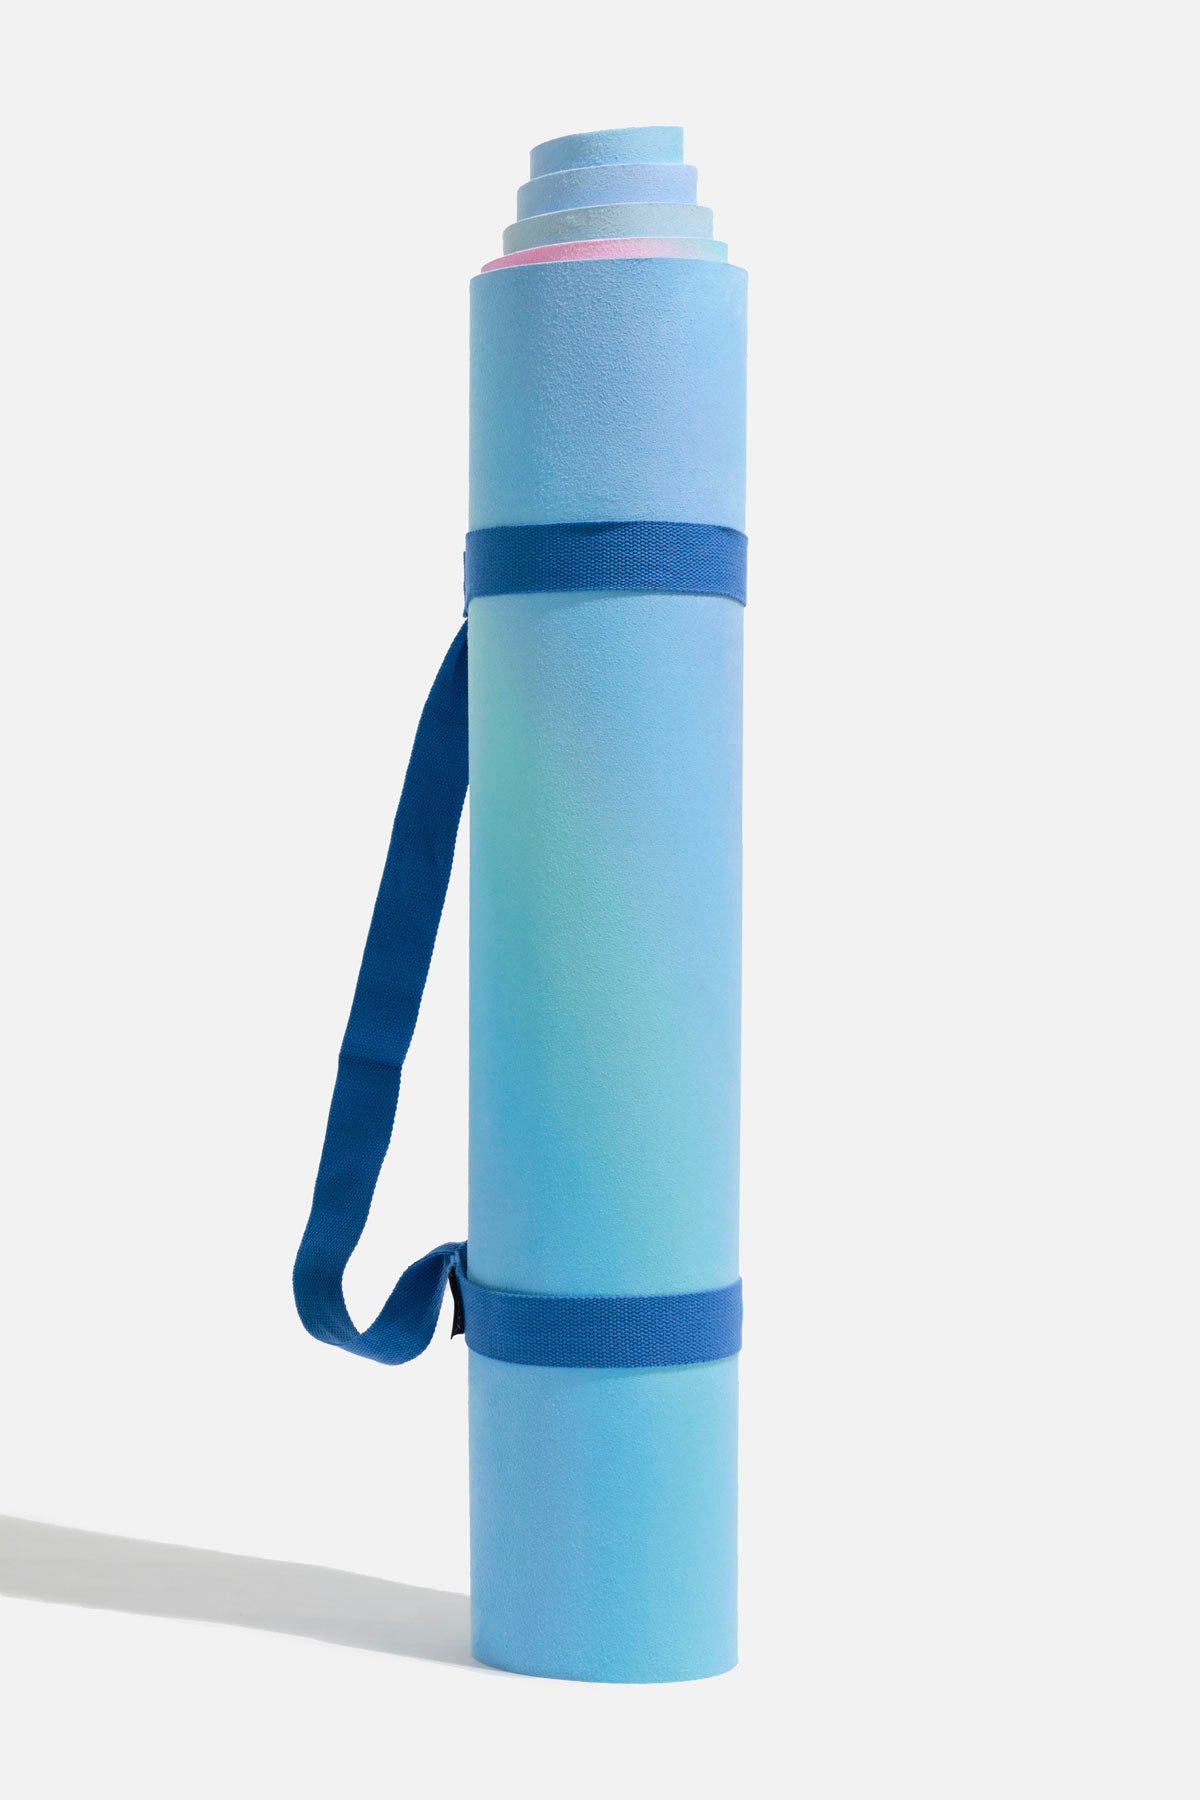 Danskin Suede Yoga Mat - Blue - 4mm